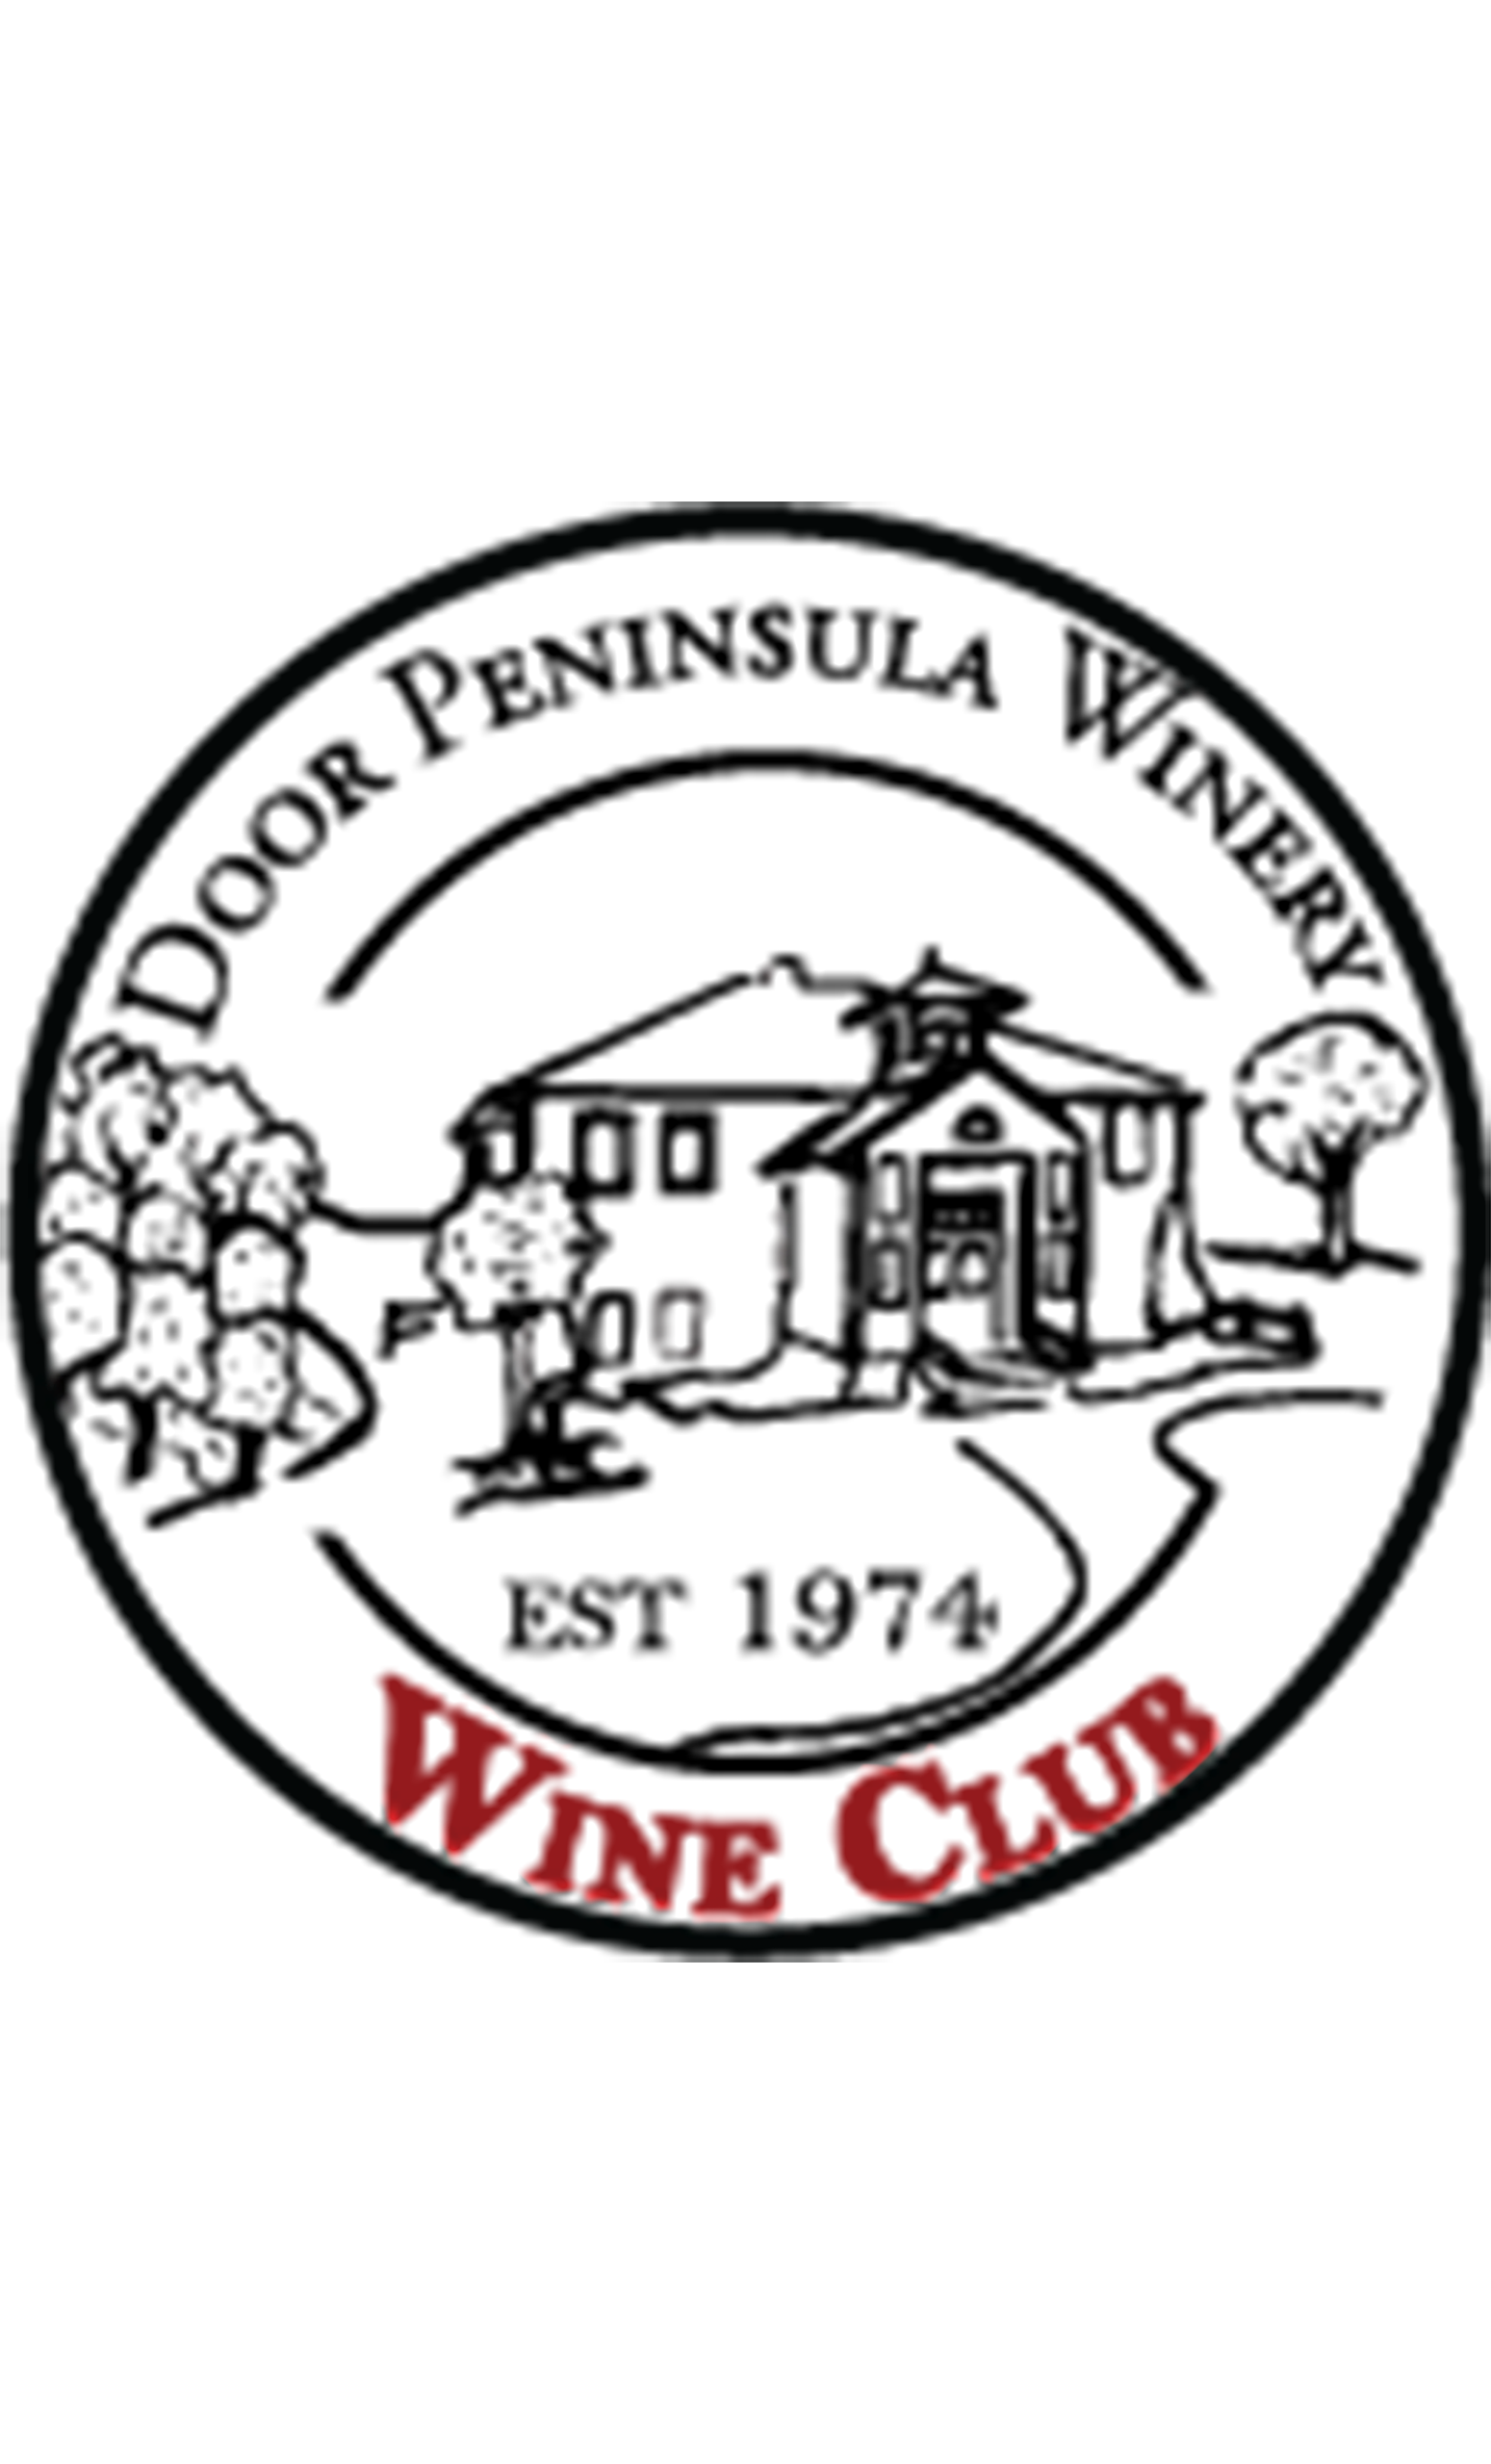 Logo Wine Glasses – Door Peninsula Winery